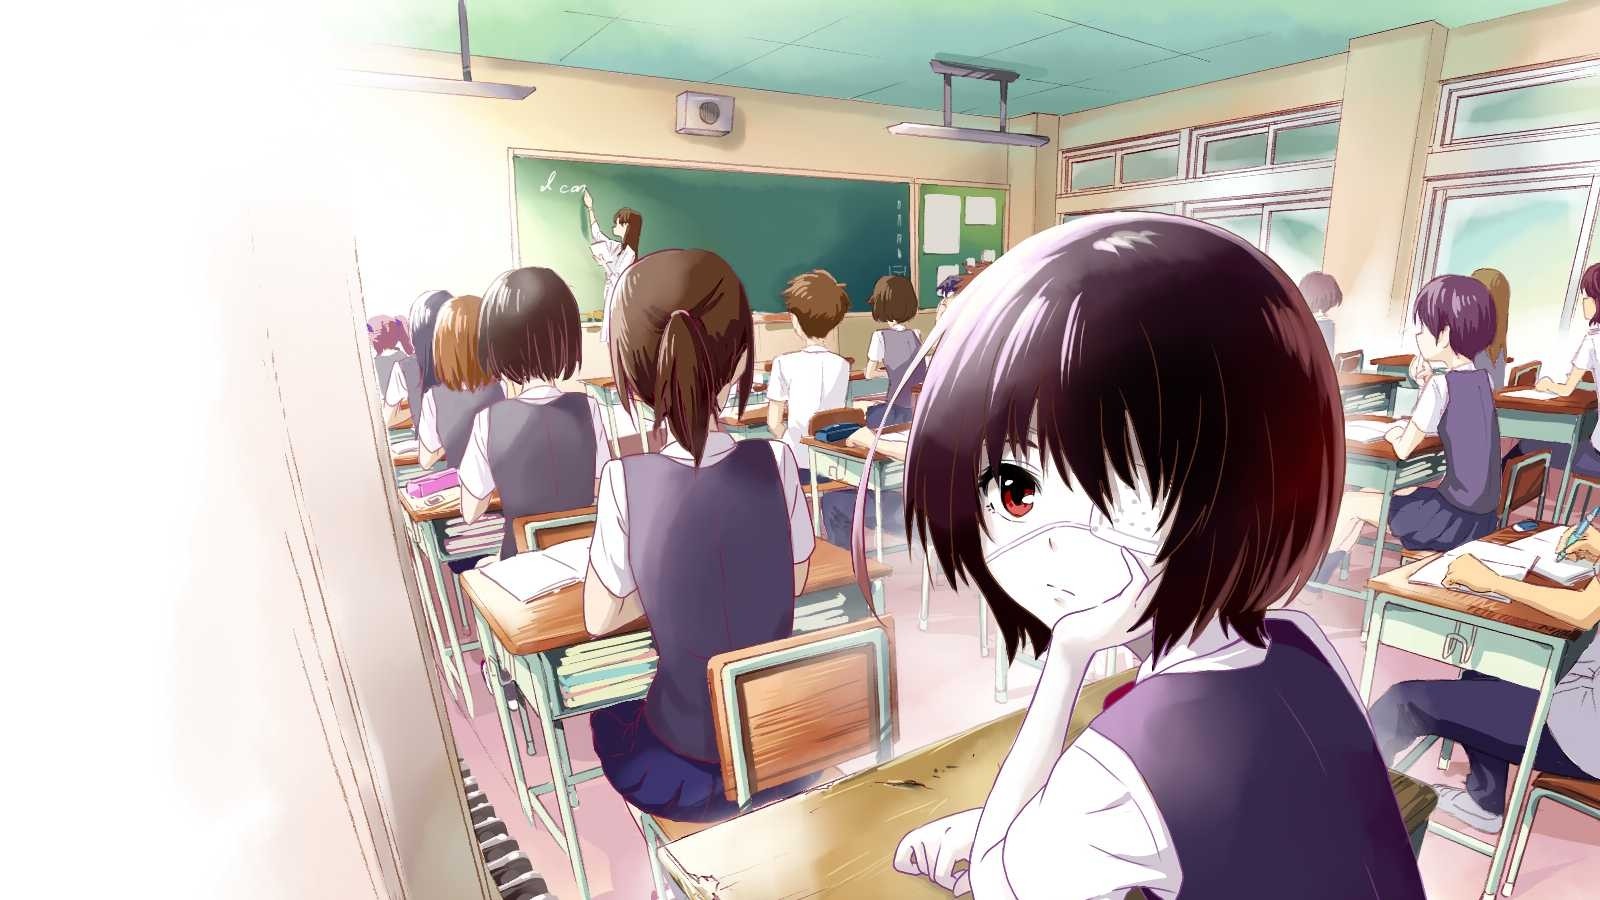 Anime 1600x900 Another Misaki Mei anime girls 2D JK school uniform black hair short hair red eyes pale fan art eyepatches classroom